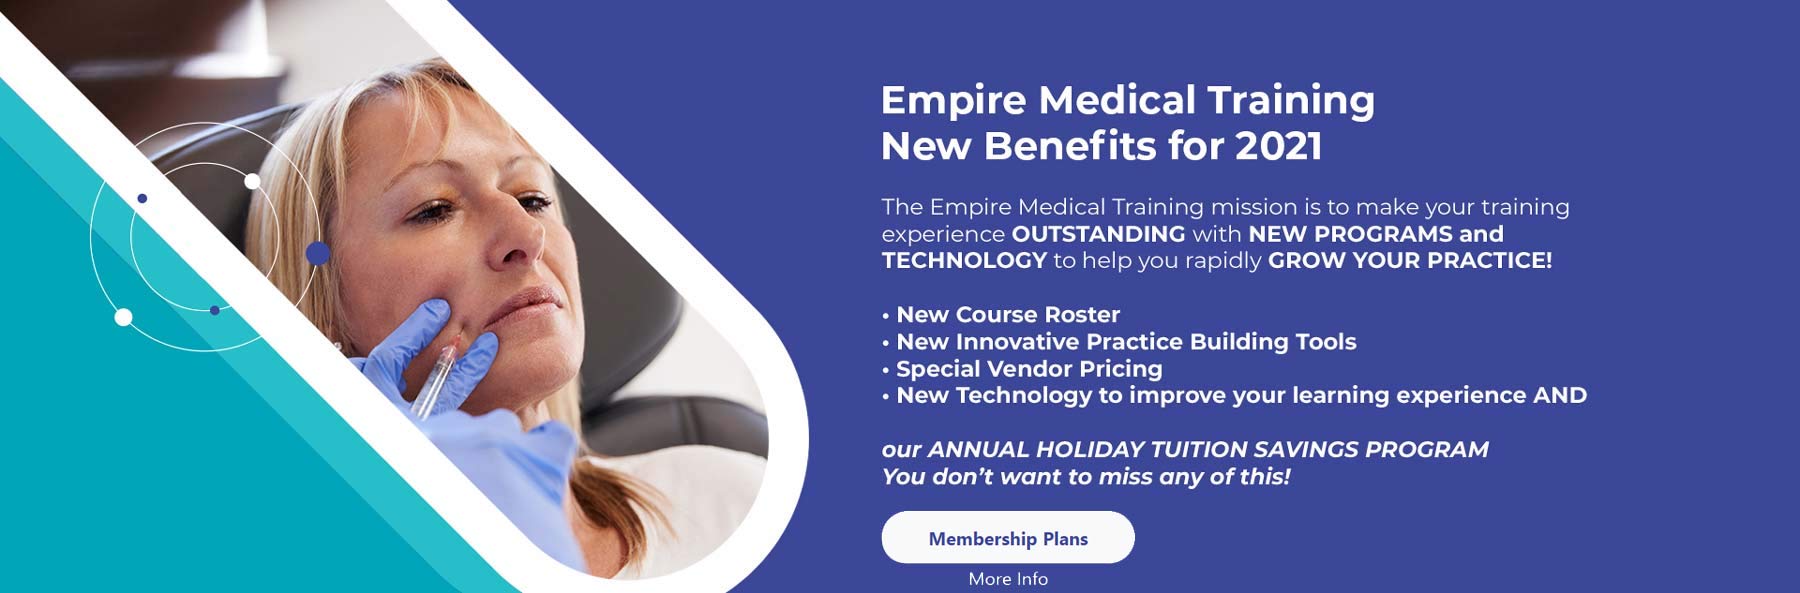 Empire Benefits 2021 Empire Medical Training